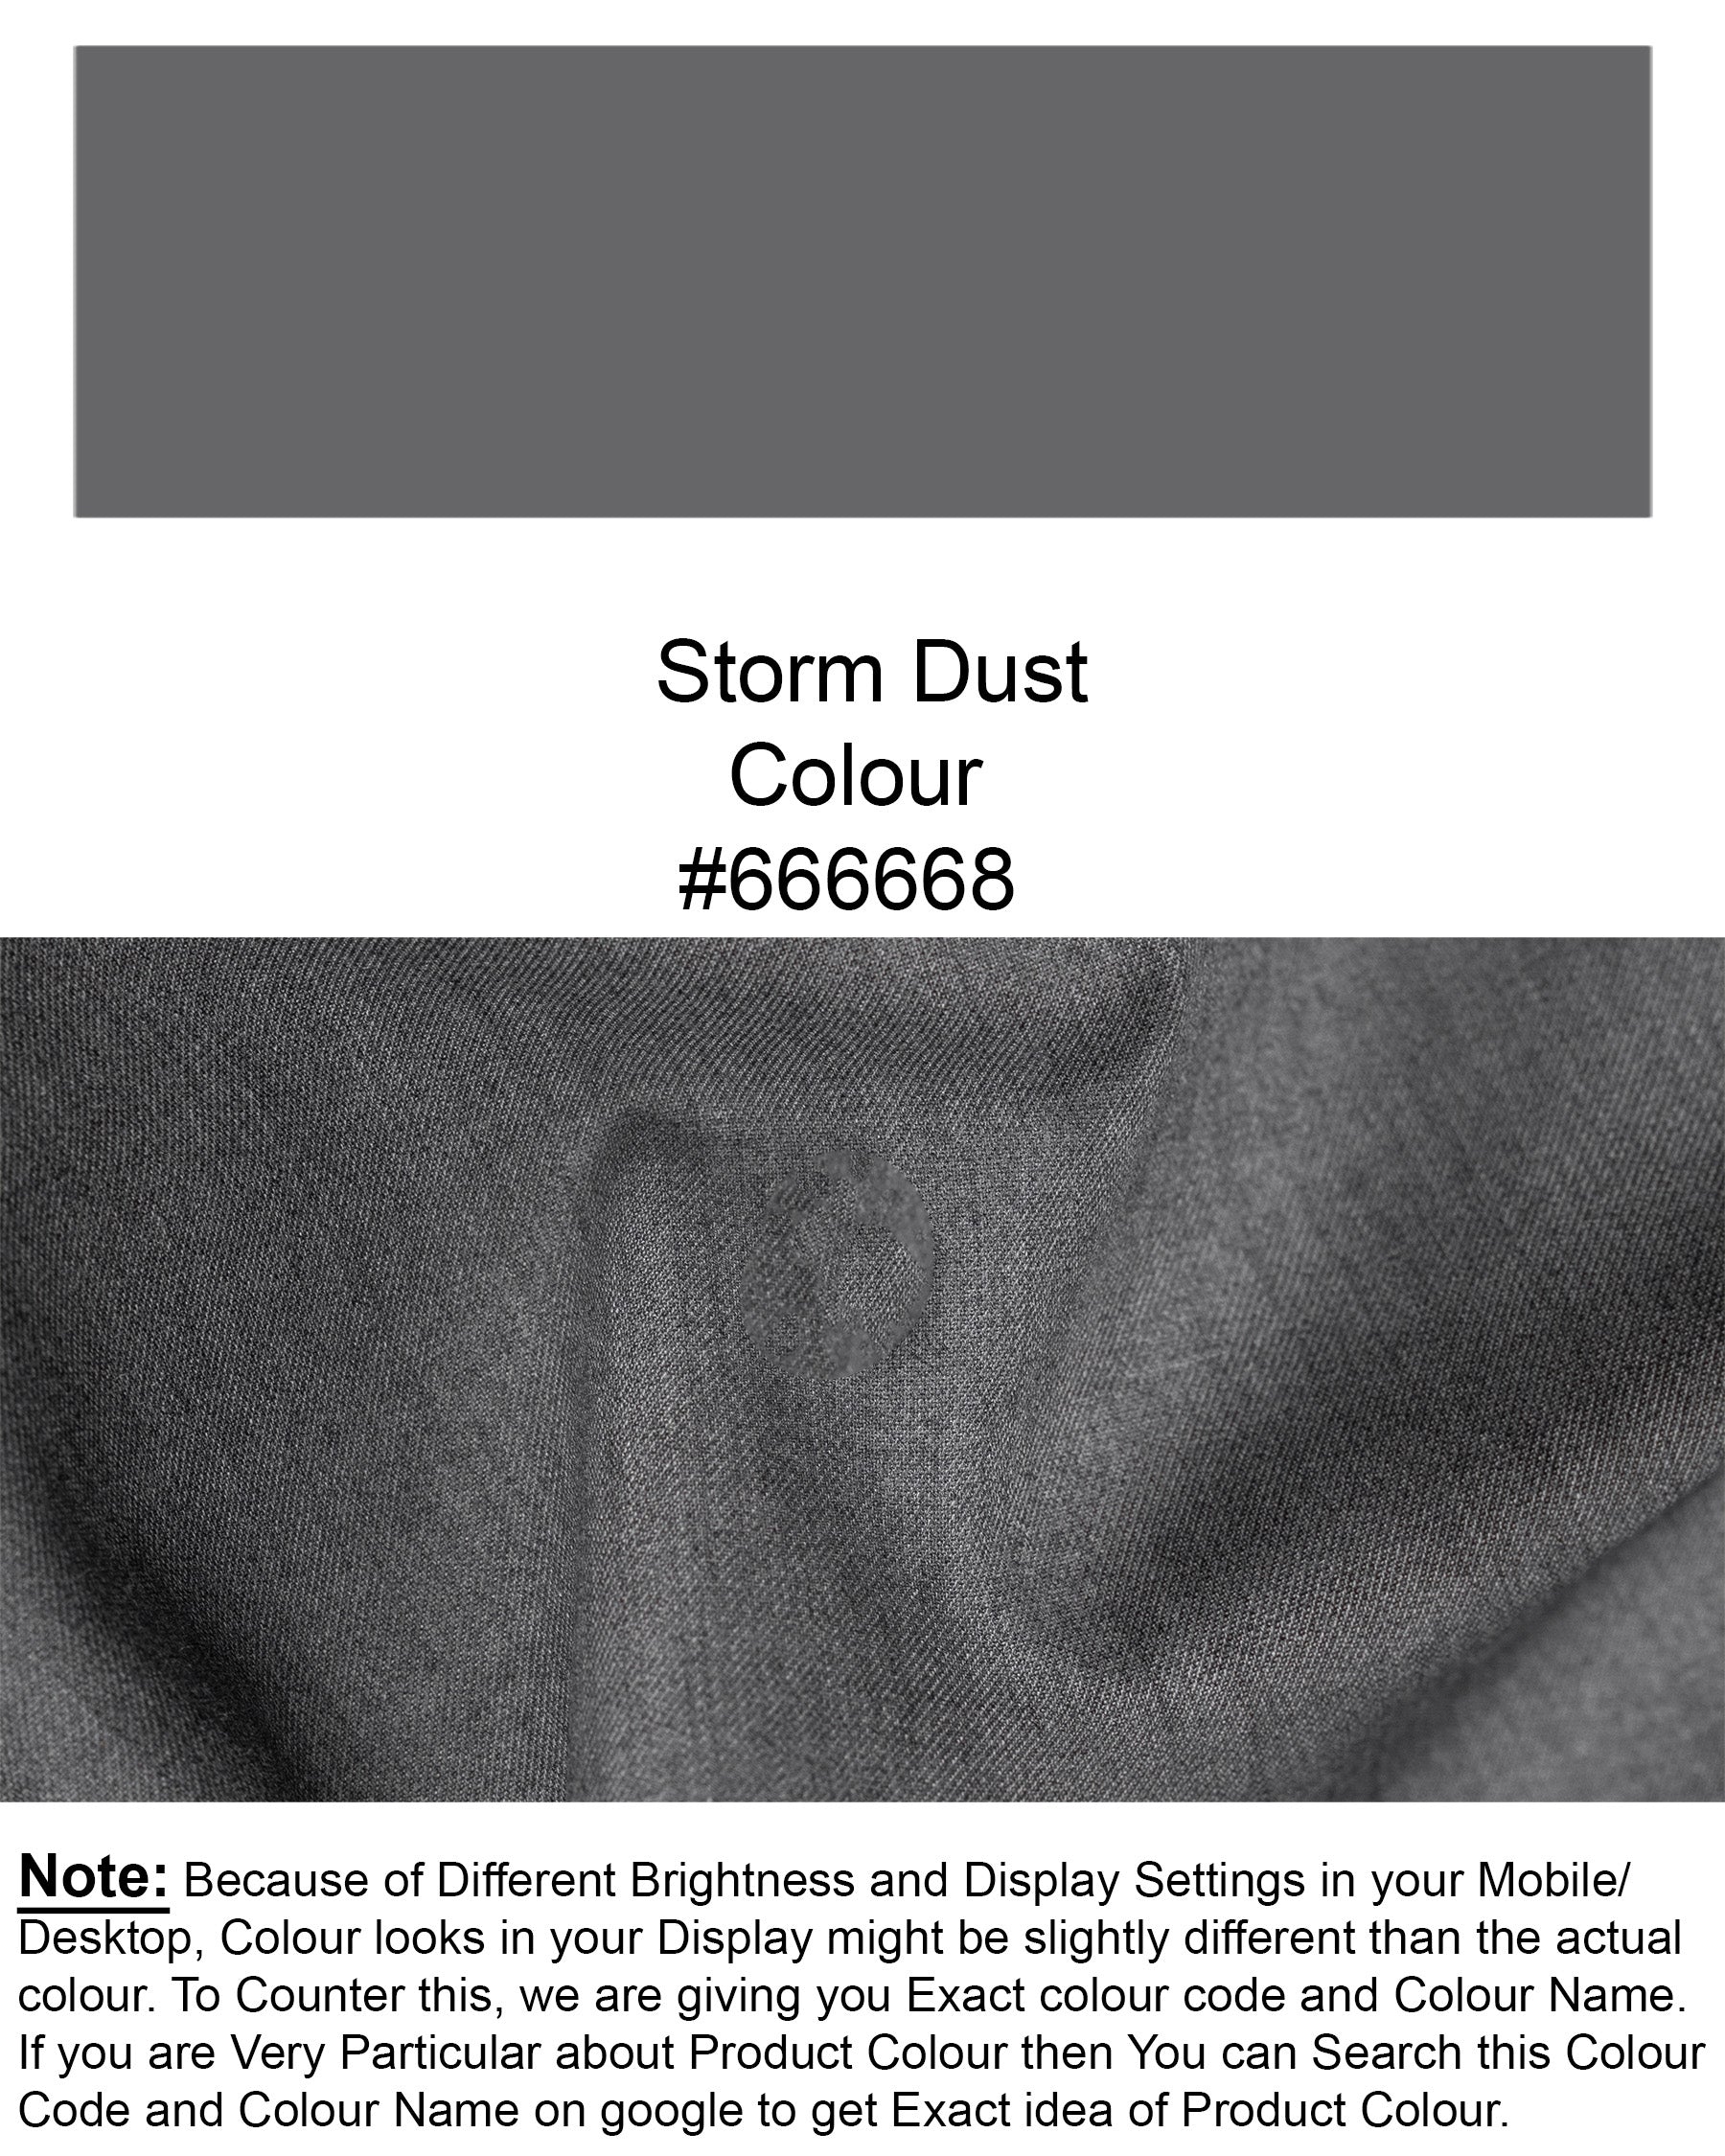 Storm Dust Grey Woolrich Cross buttoned Bandhgala Suit ST1631-CBG2-36, ST1631-CBG2-38, ST1631-CBG2-40, ST1631-CBG2-42, ST1631-CBG2-44, ST1631-CBG2-46, ST1631-CBG2-48, ST1631-CBG2-50, ST1631-CBG2-52, ST1631-CBG2-54, ST1631-CBG2-56, ST1631-CBG2-58, ST1631-CBG2-60